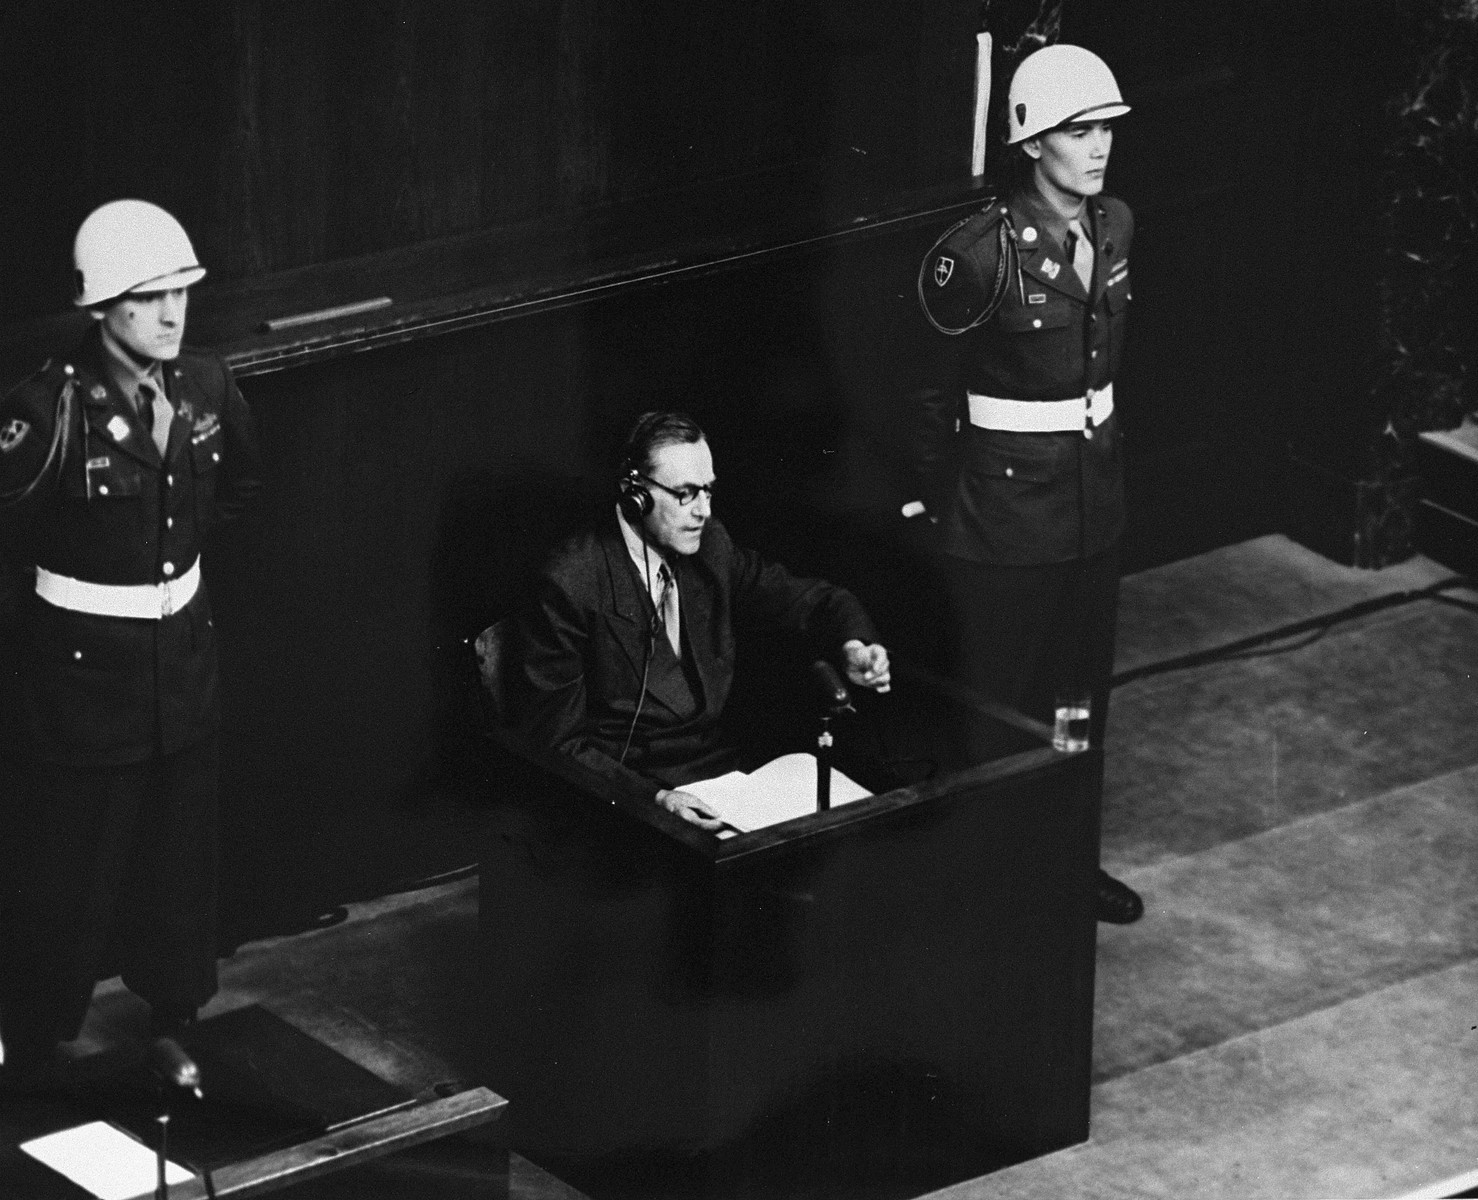 A witness testifies at the International Military Tribunal trial of war criminals at Nuremberg.